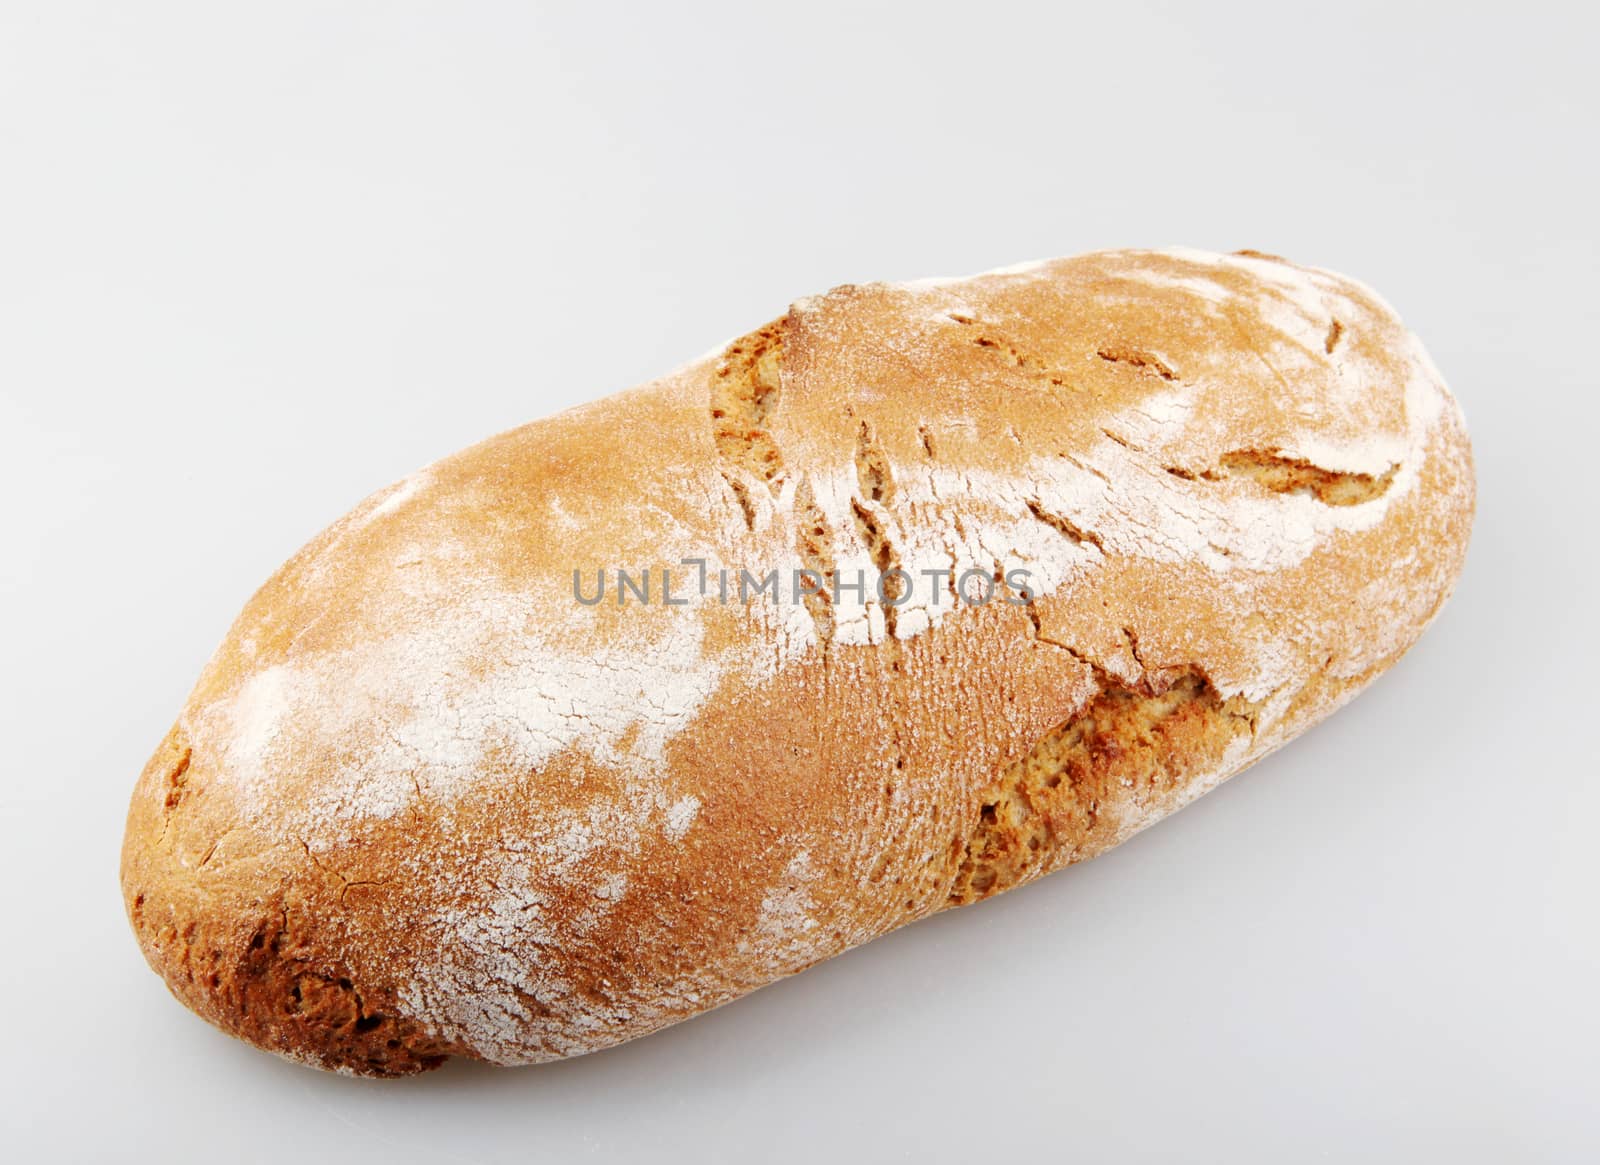 Freshly Baked Bread Against White Background by nenovbrothers